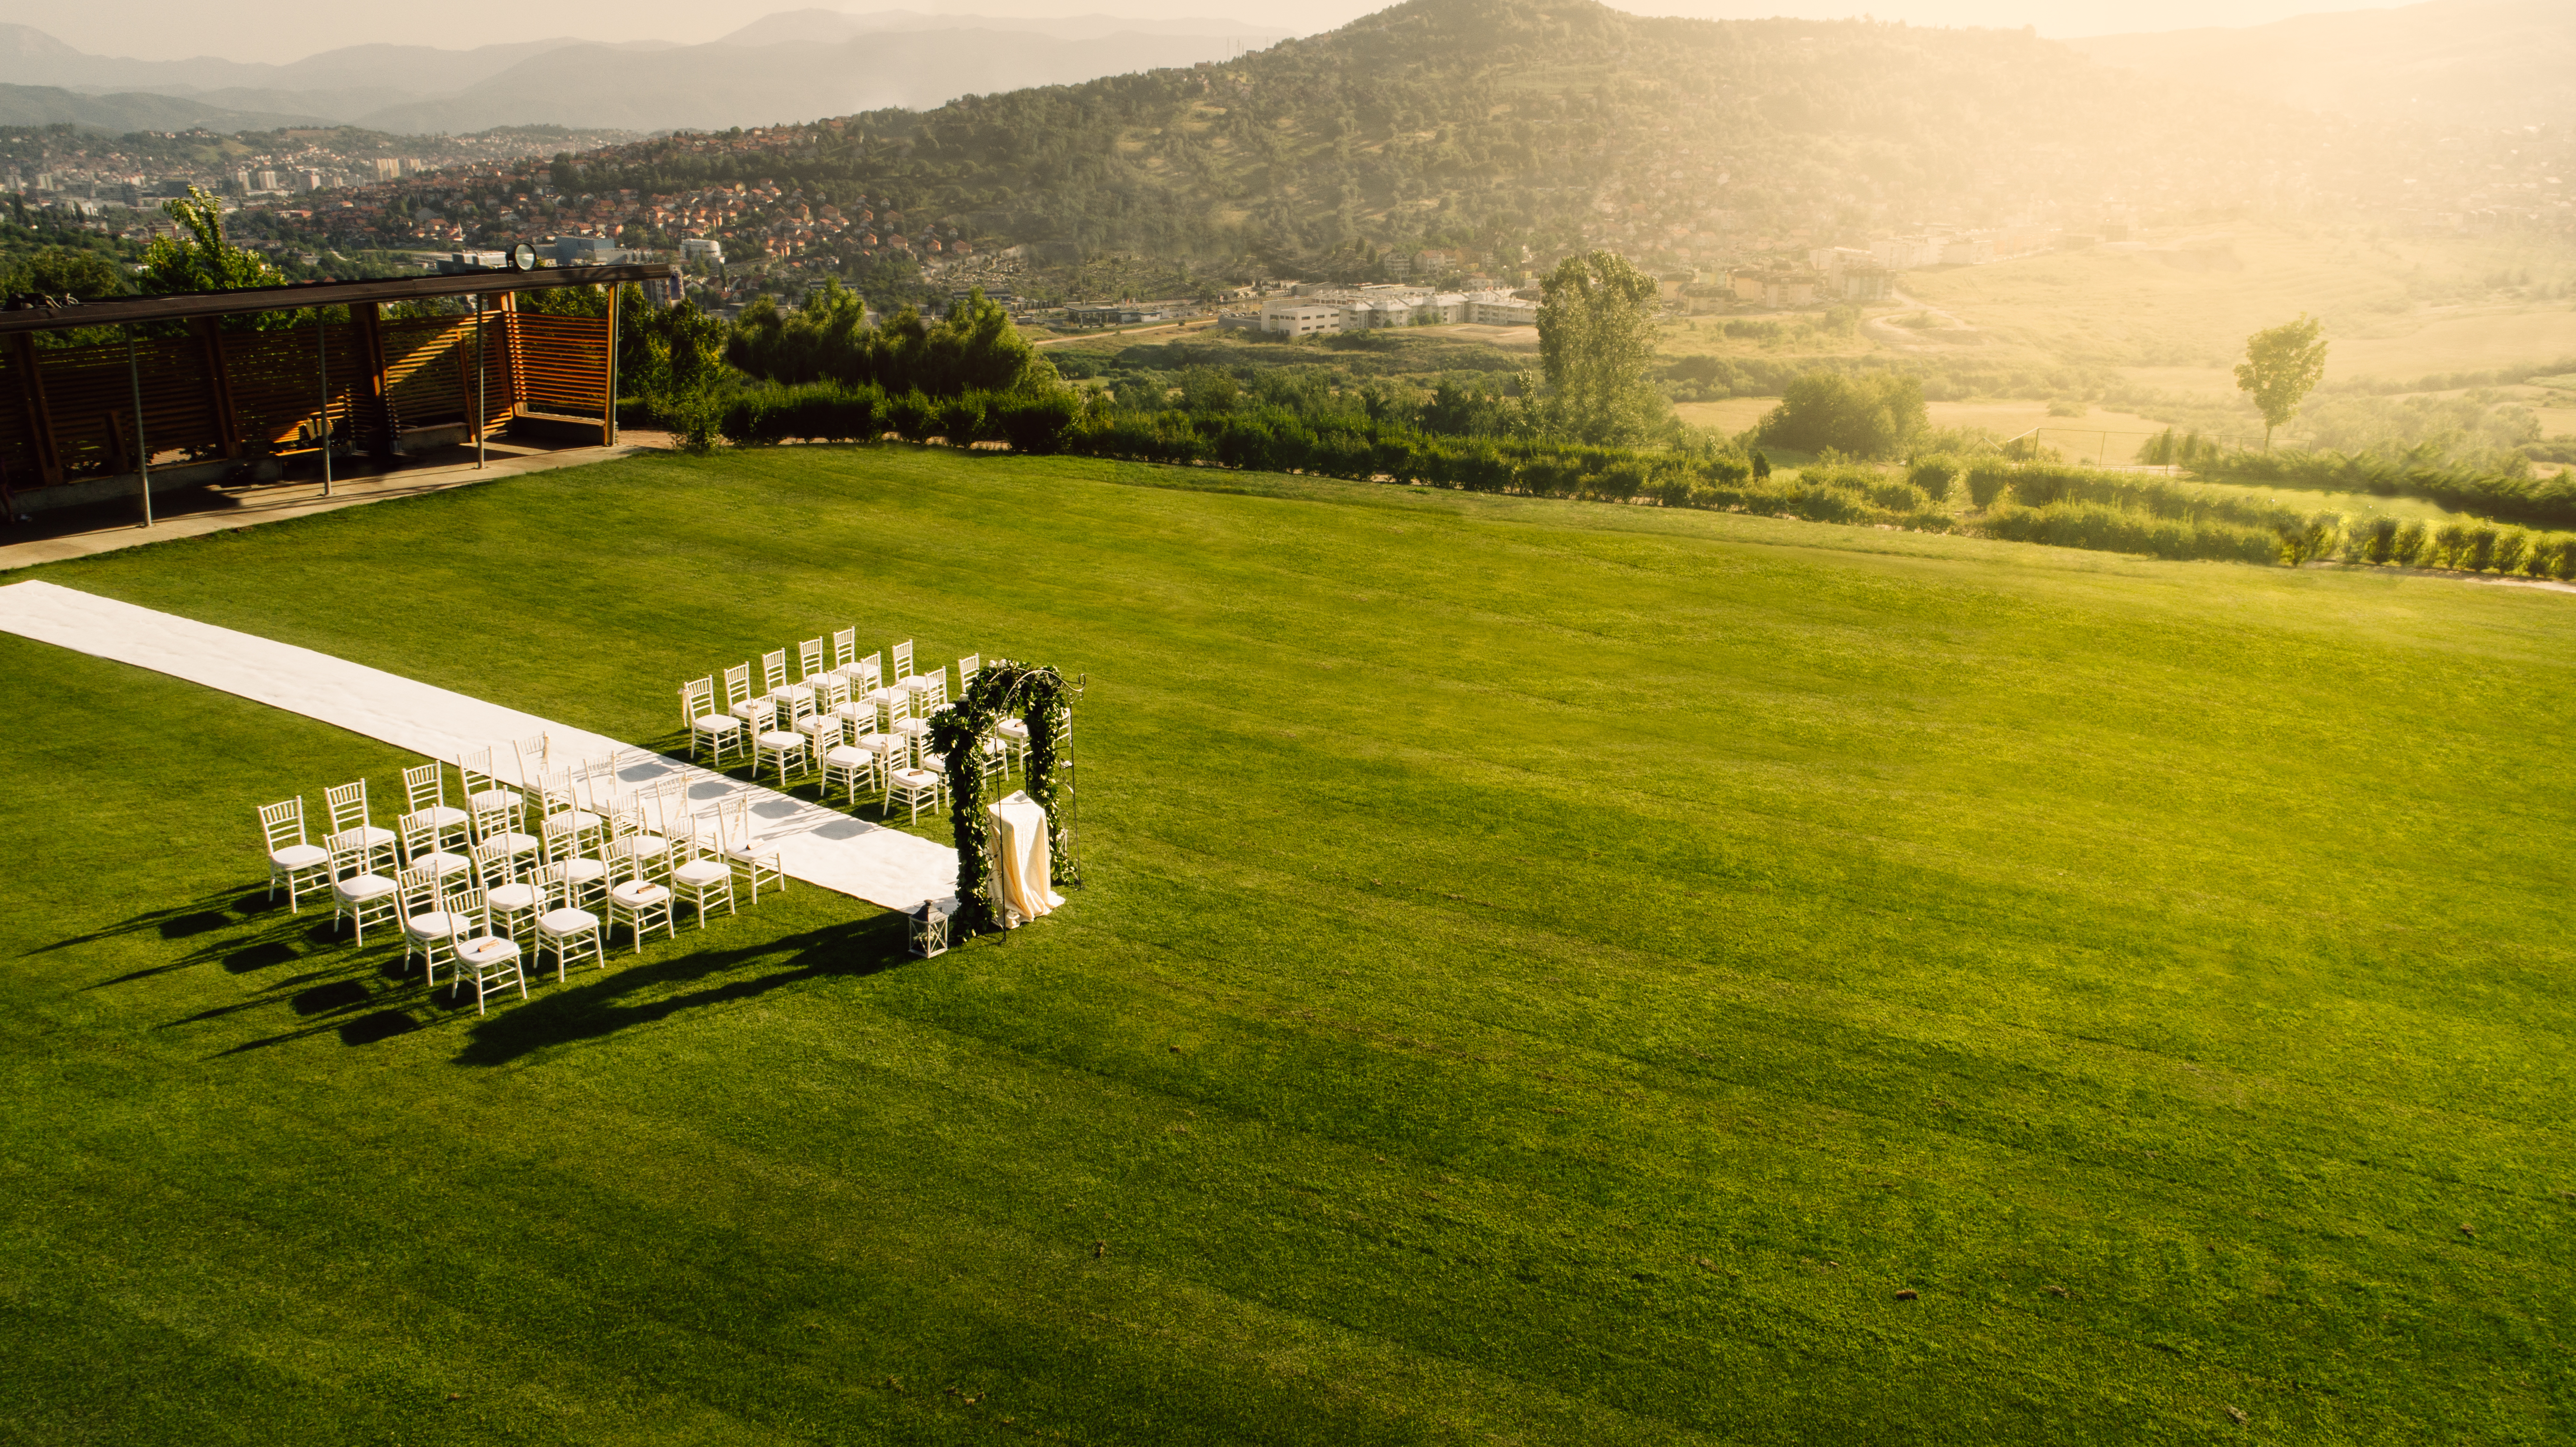 An empty wedding venue | Source: Shutterstock